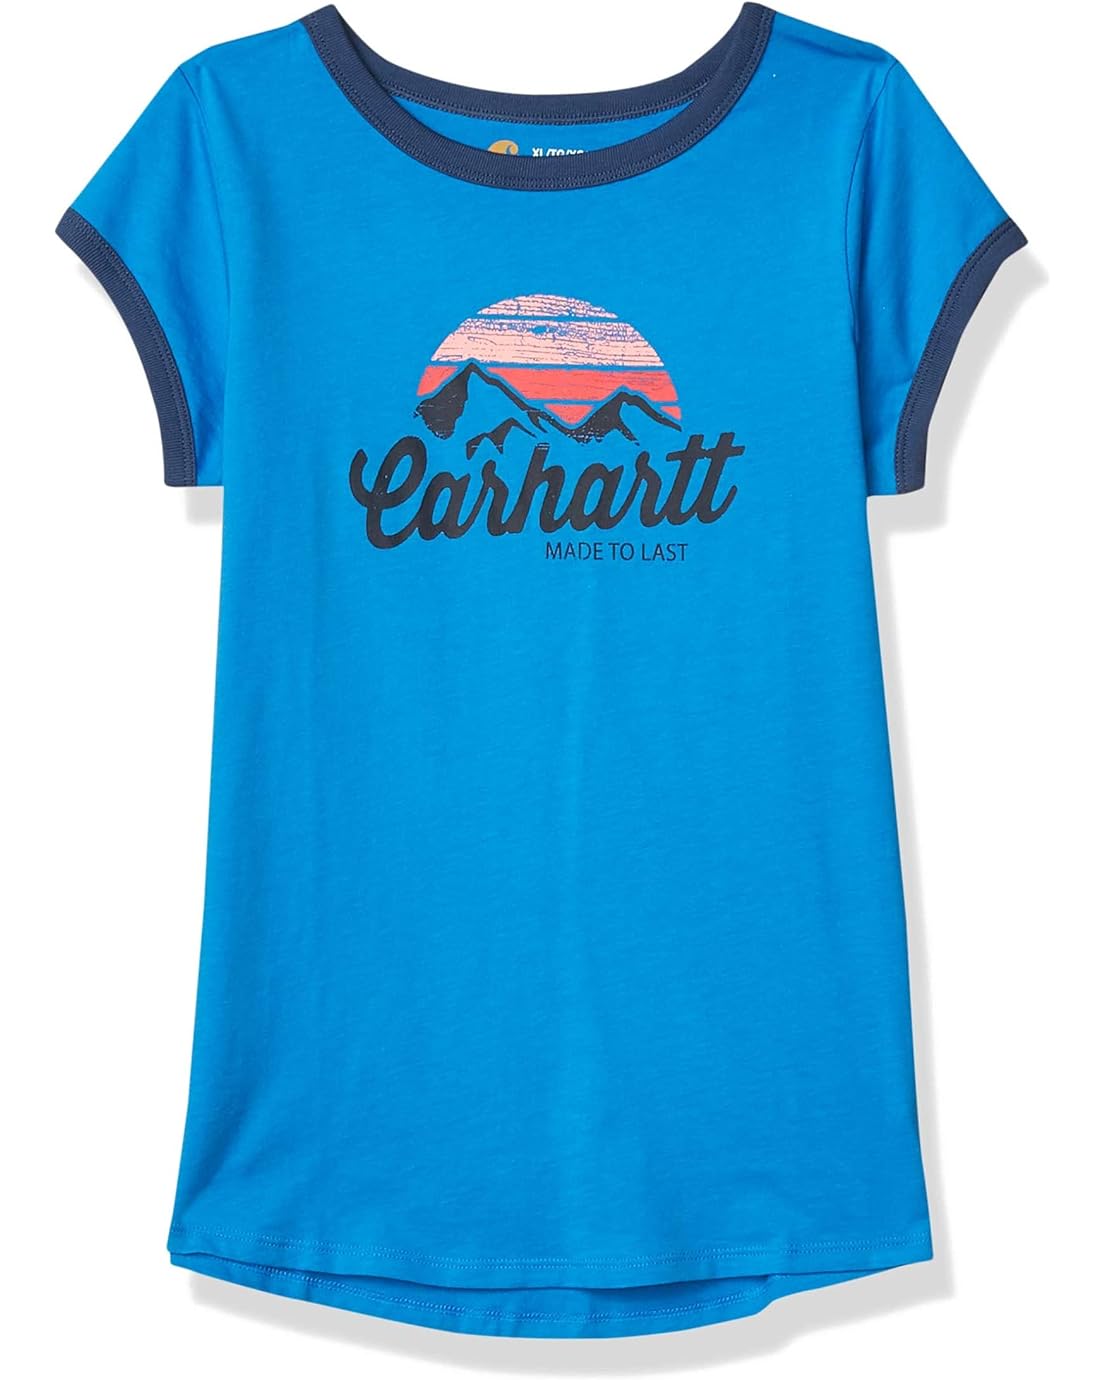 Carhartt Girls Short Sleeve Ringer Tee T-Shirt